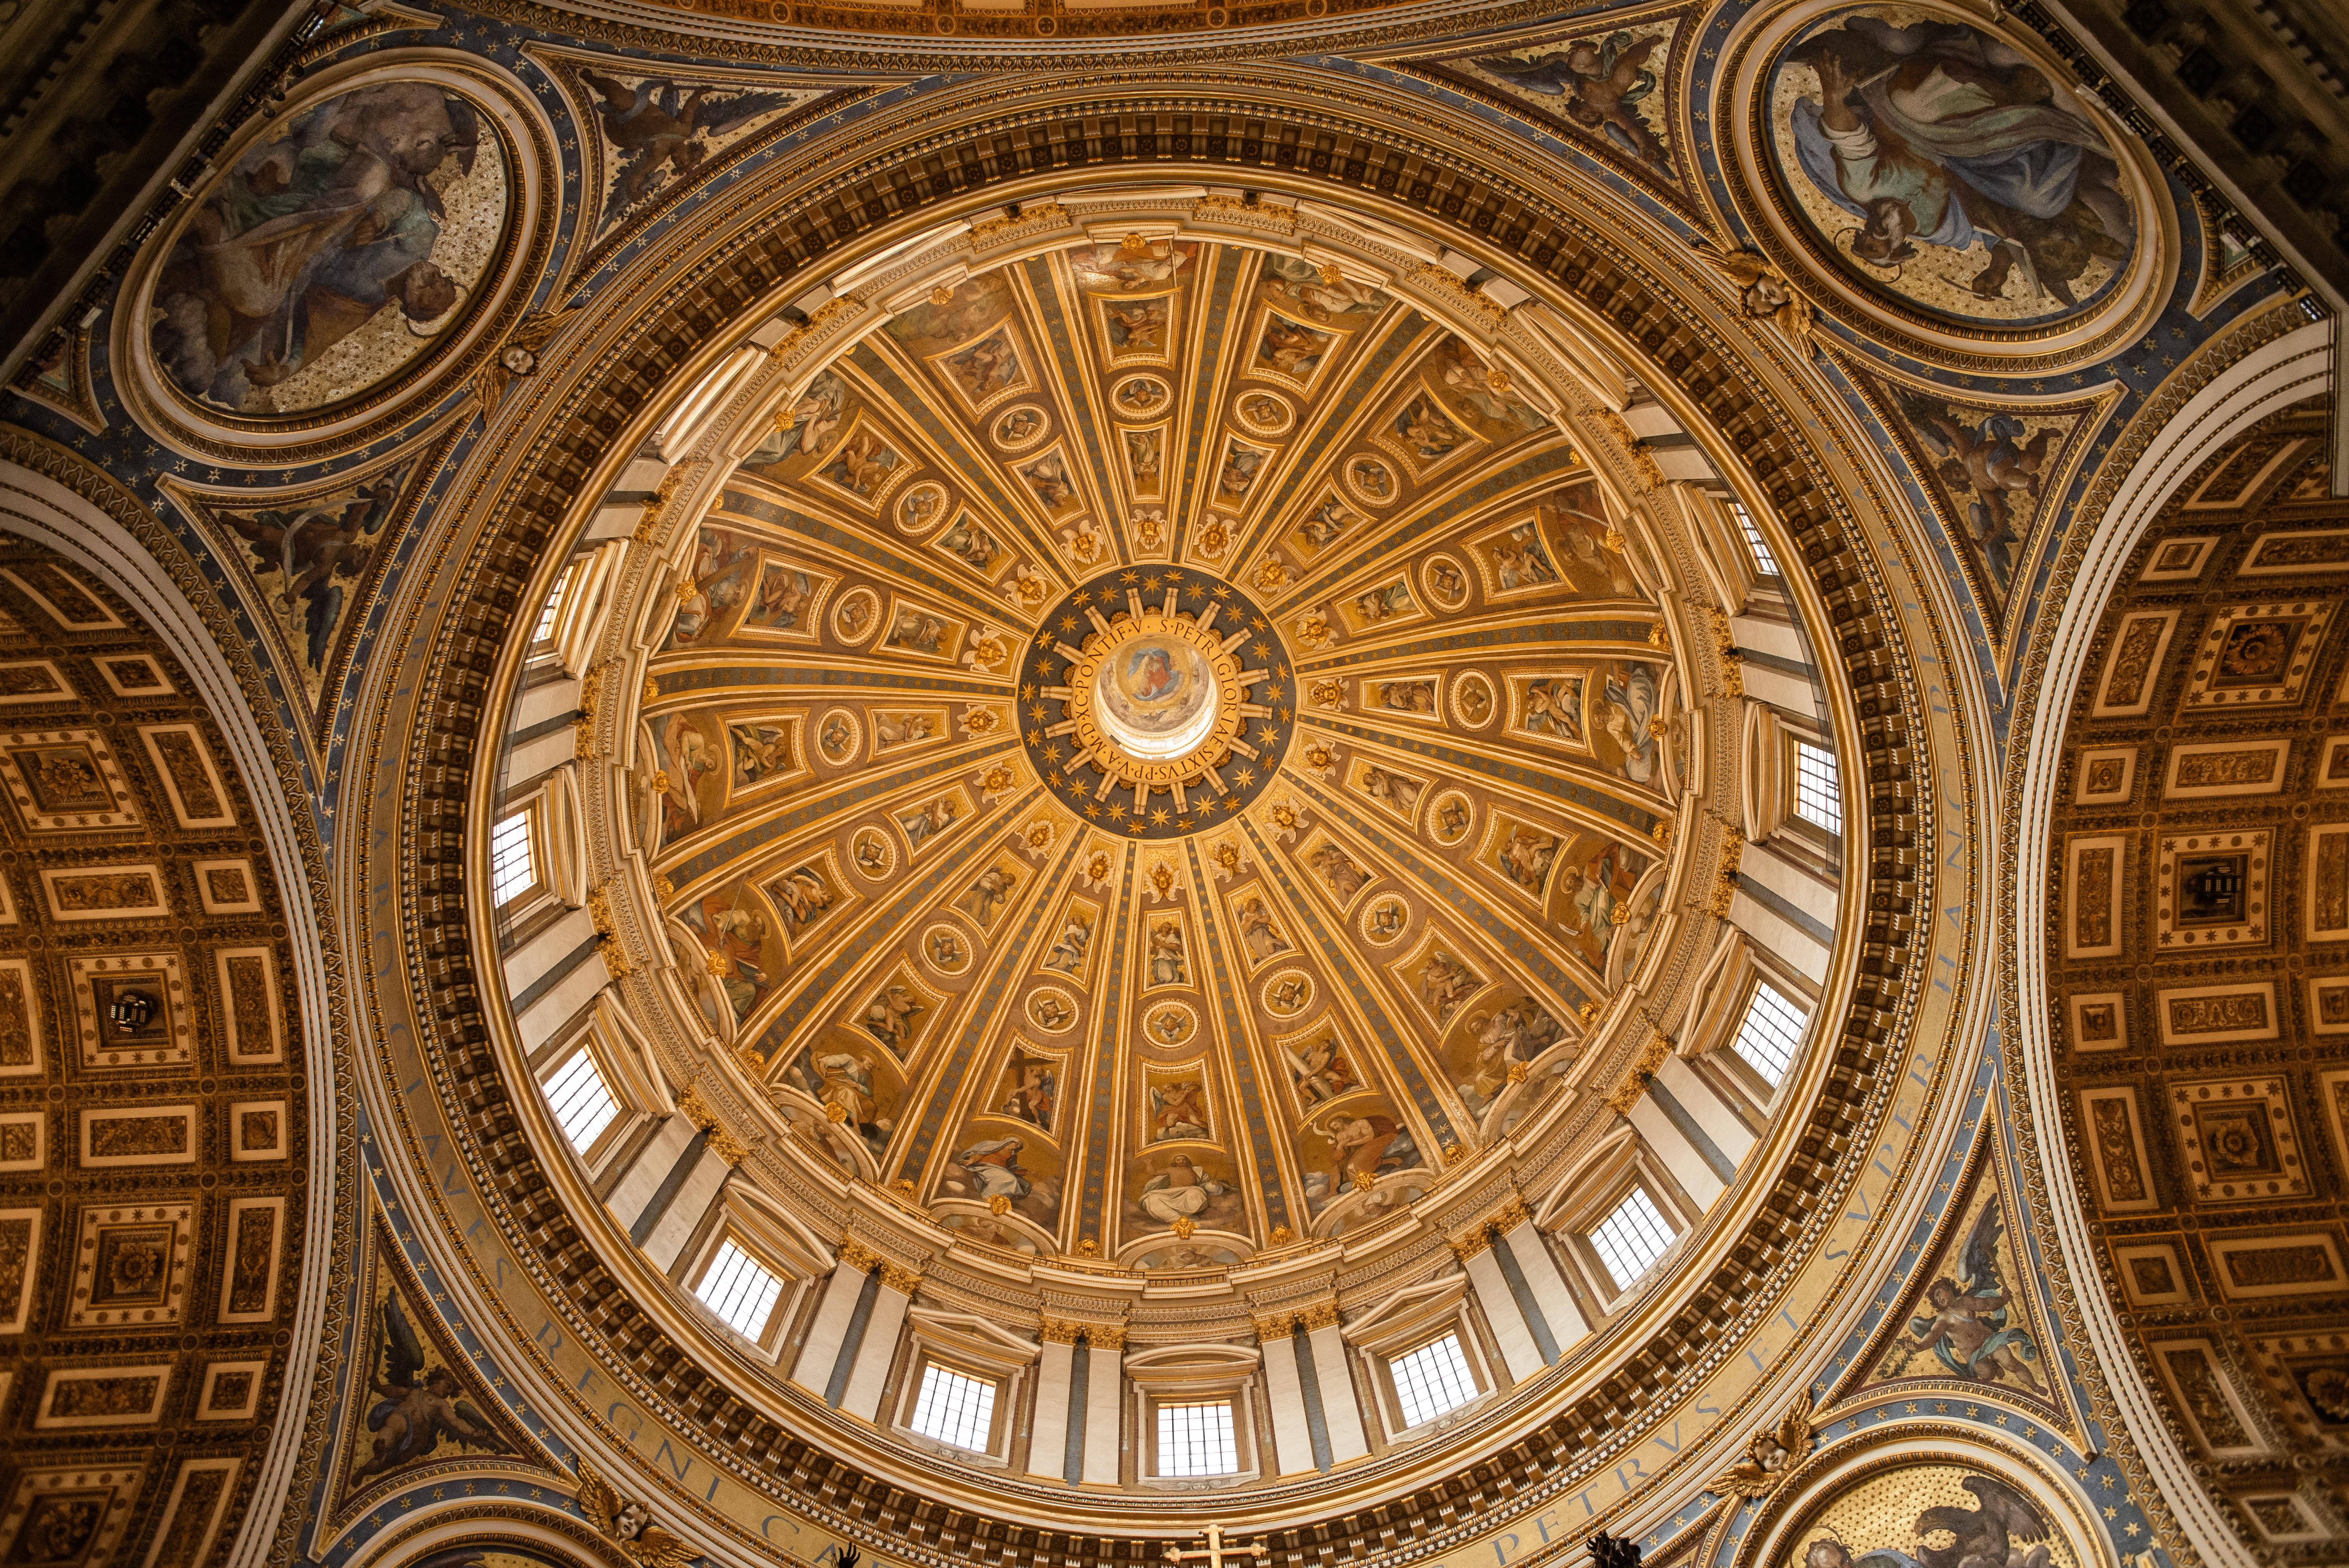 Inside St Mark’s Basilica